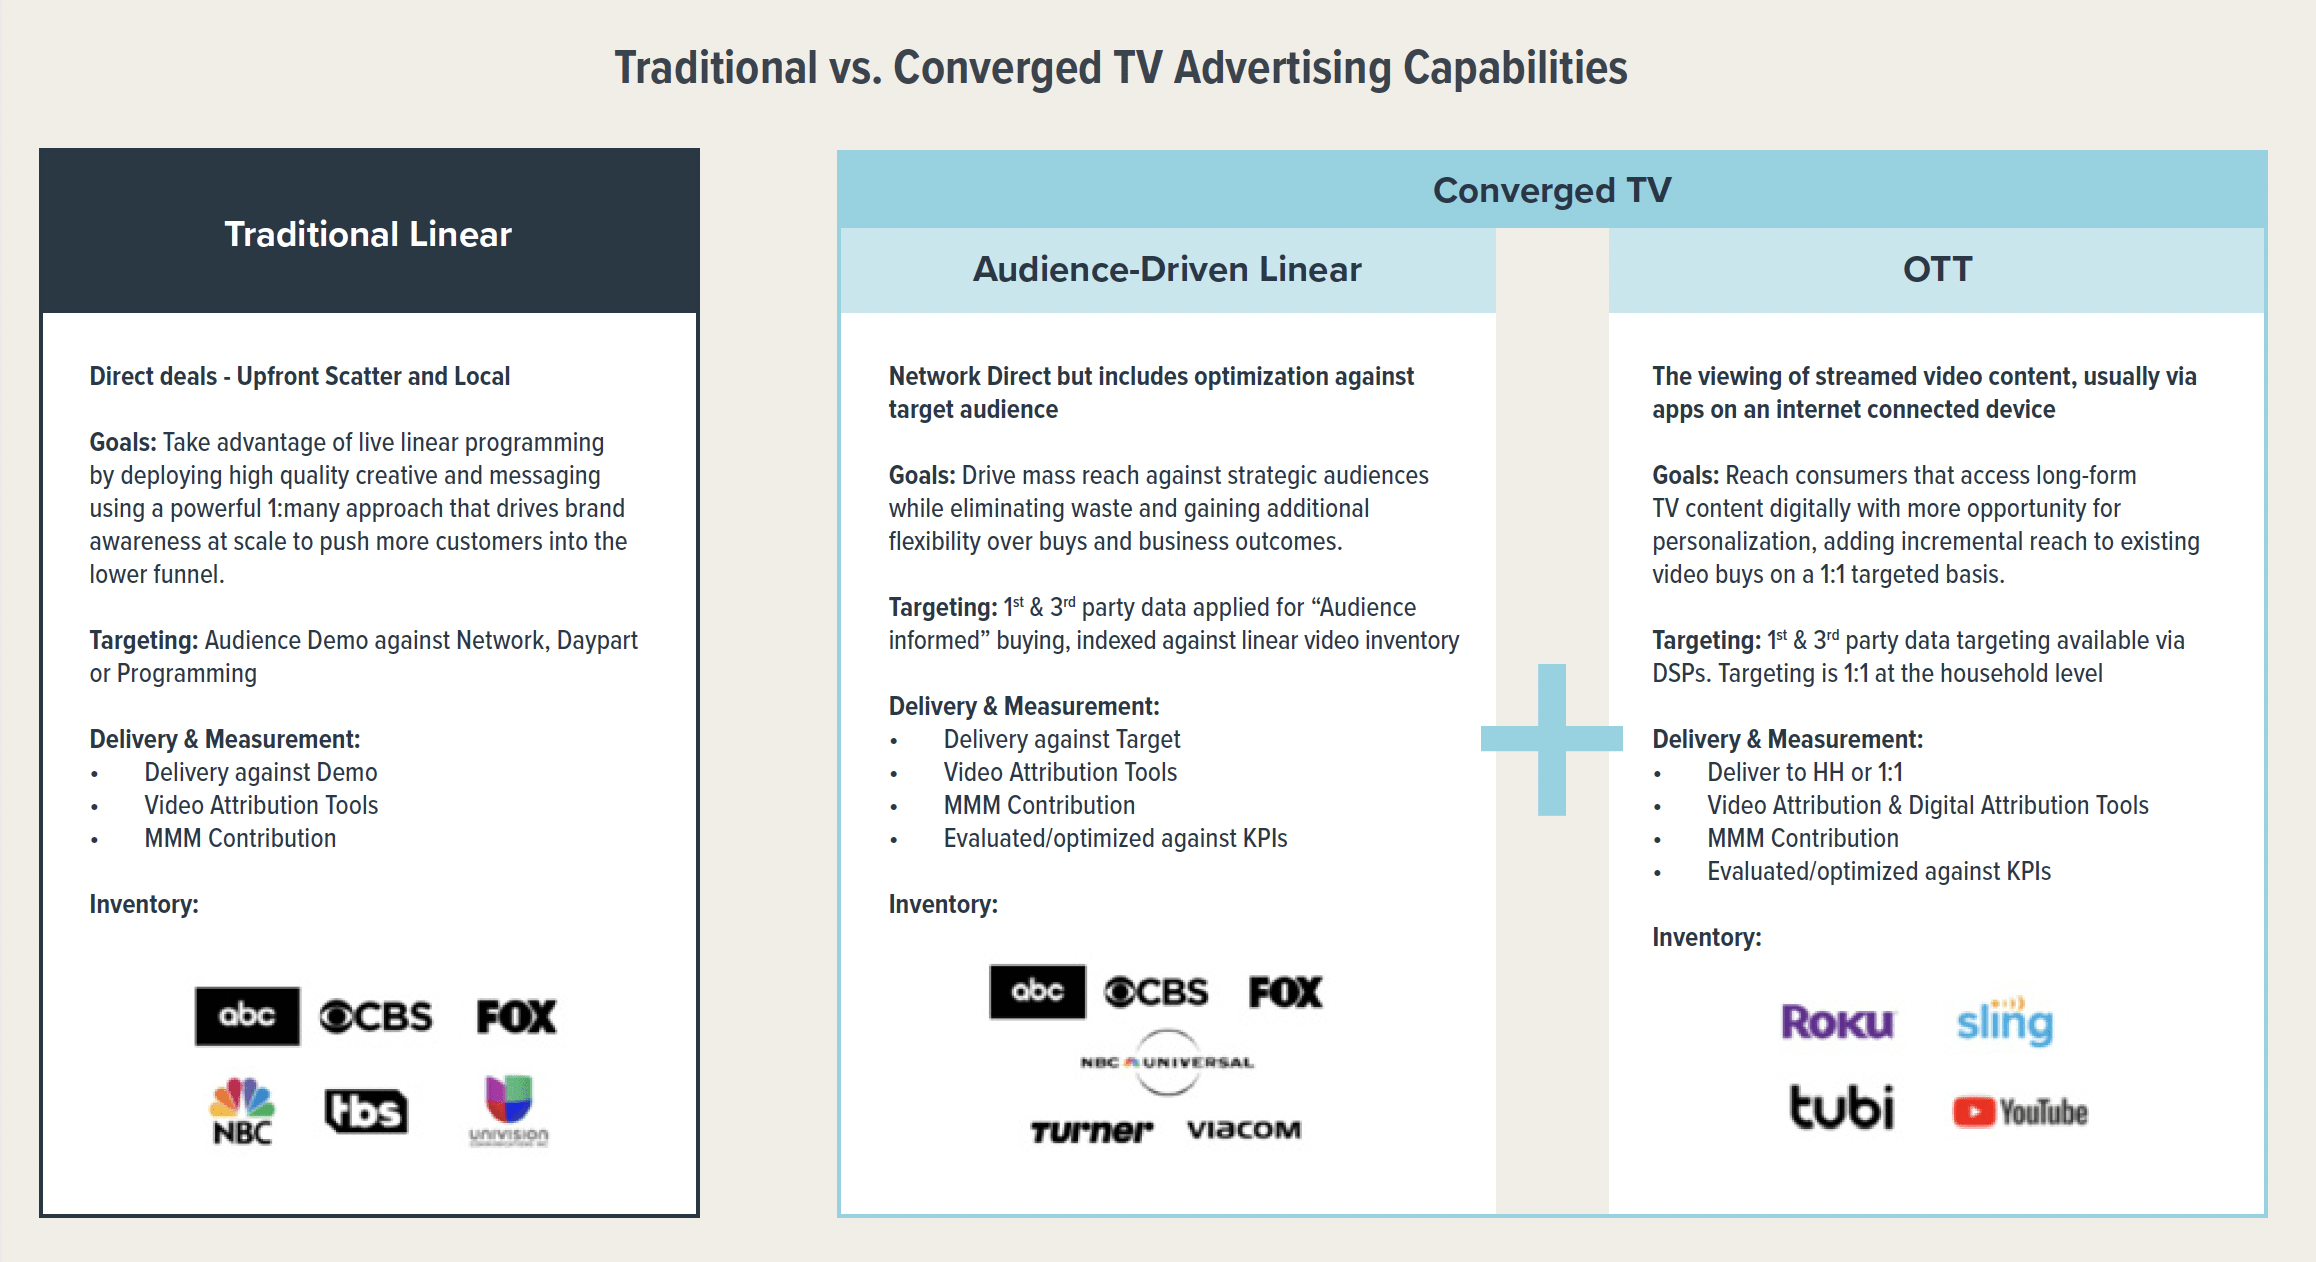 Converged TV OTT and linear TV capabilities